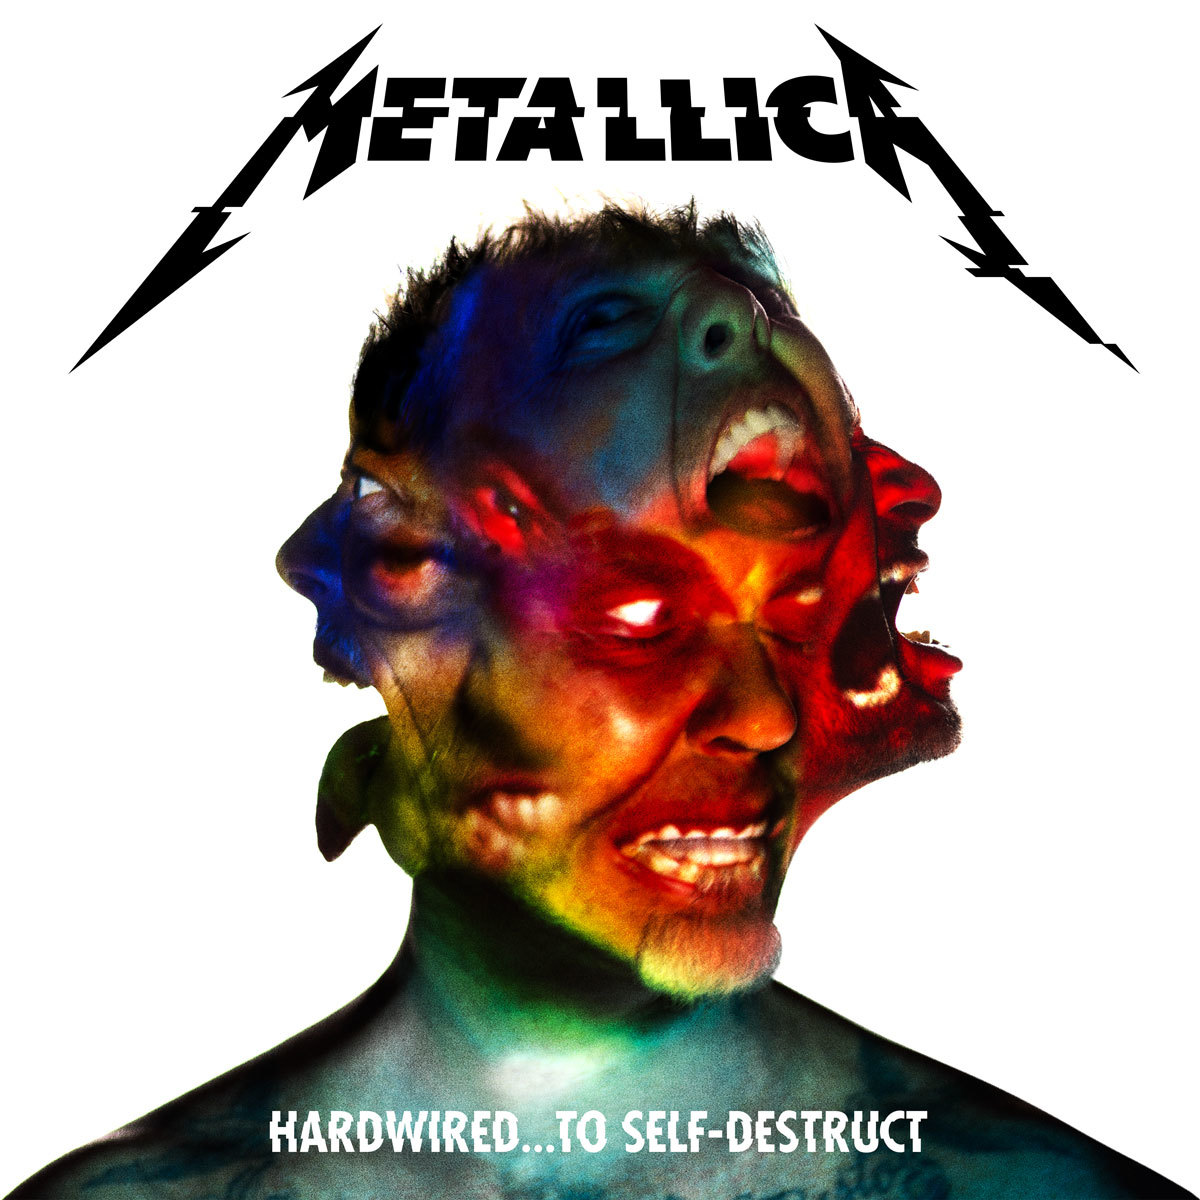 Metallica - Hardwired... To Self-Destruct (Album Cover)